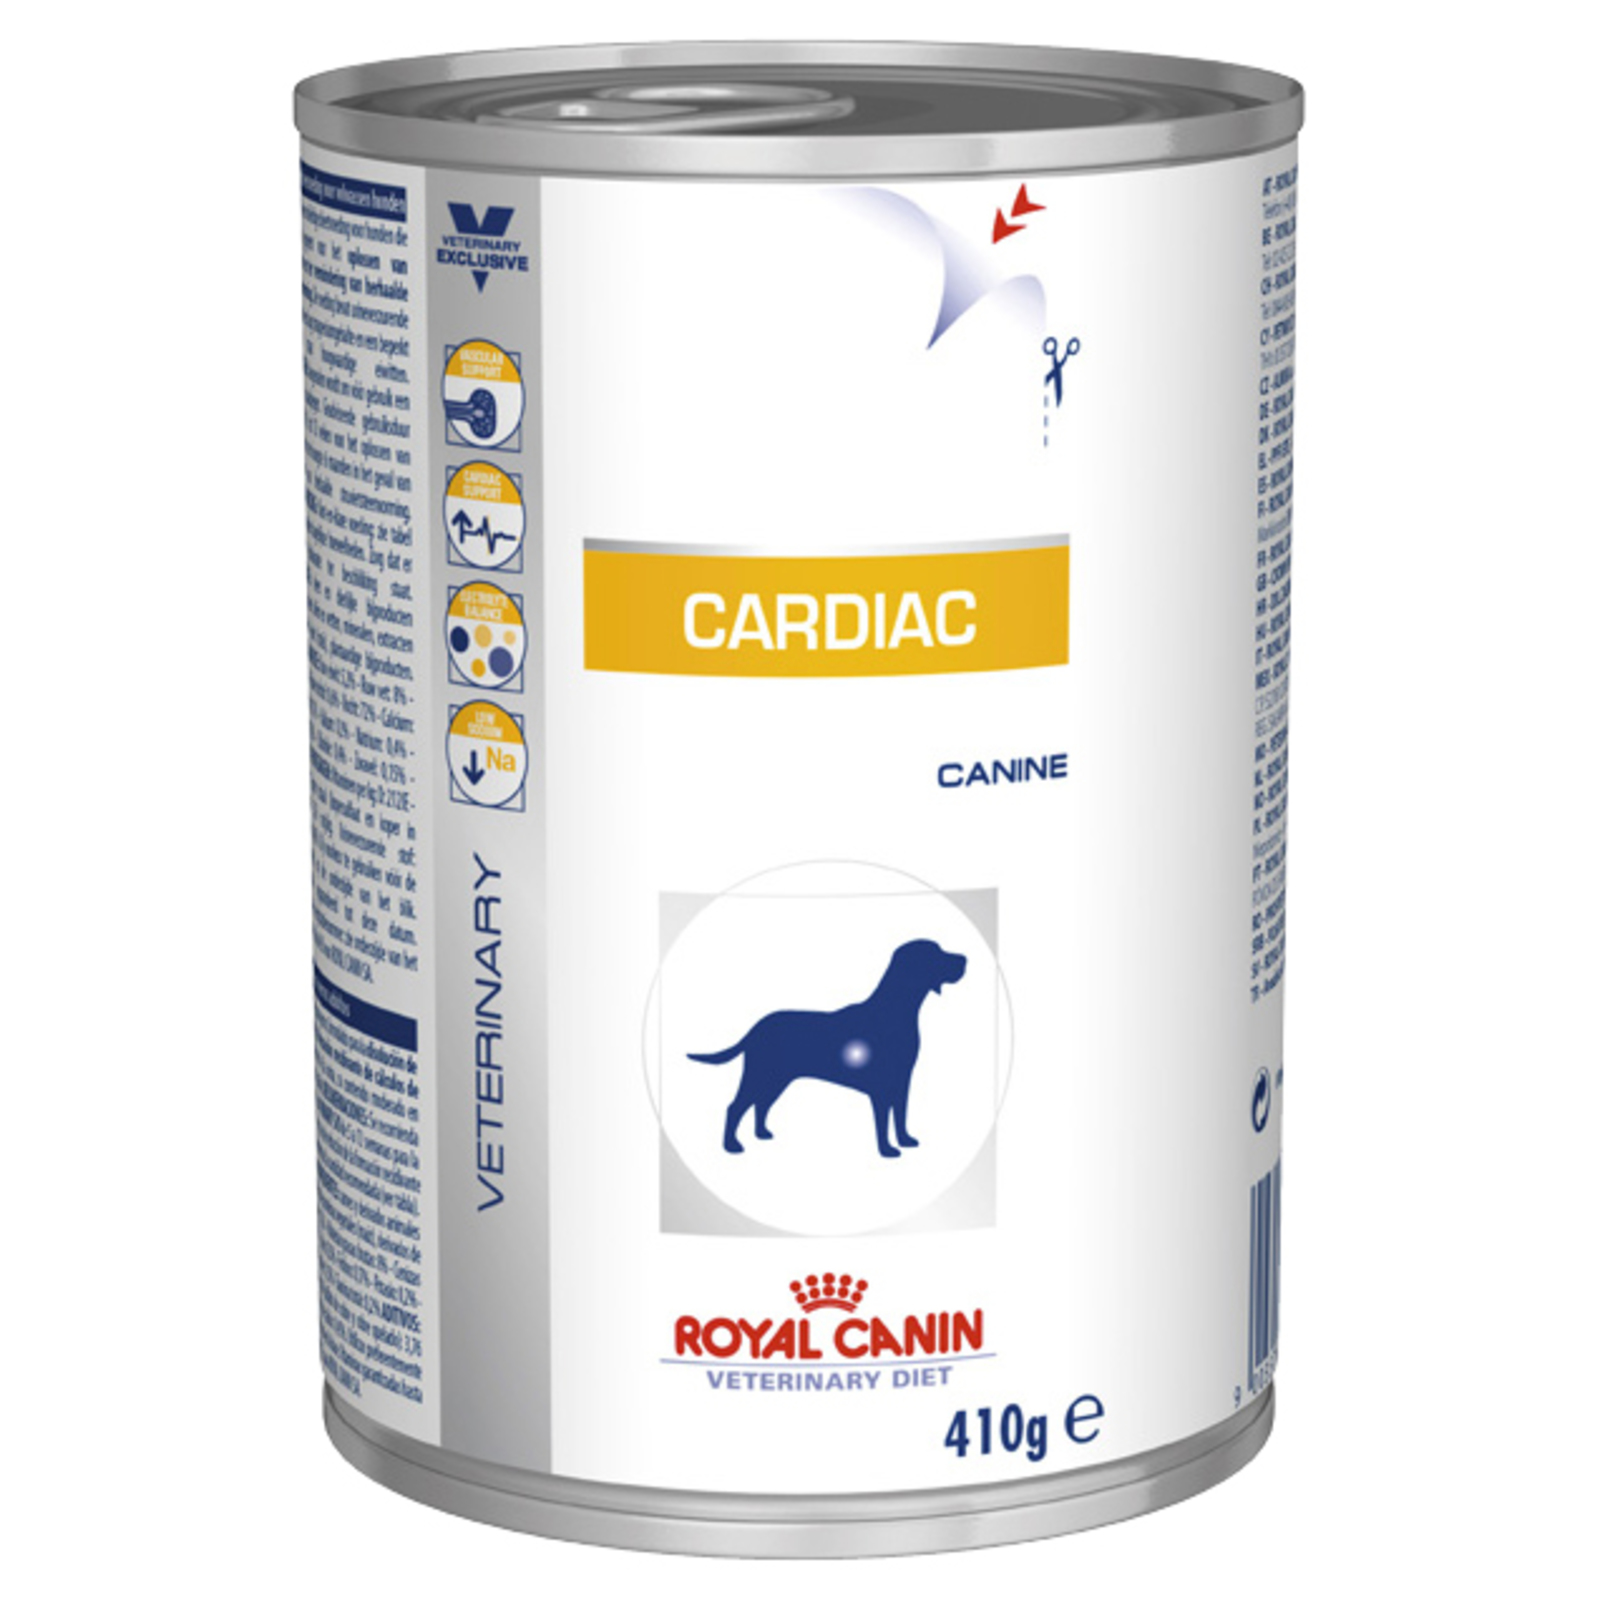 Royal Canin Cardiac Can Dog Food